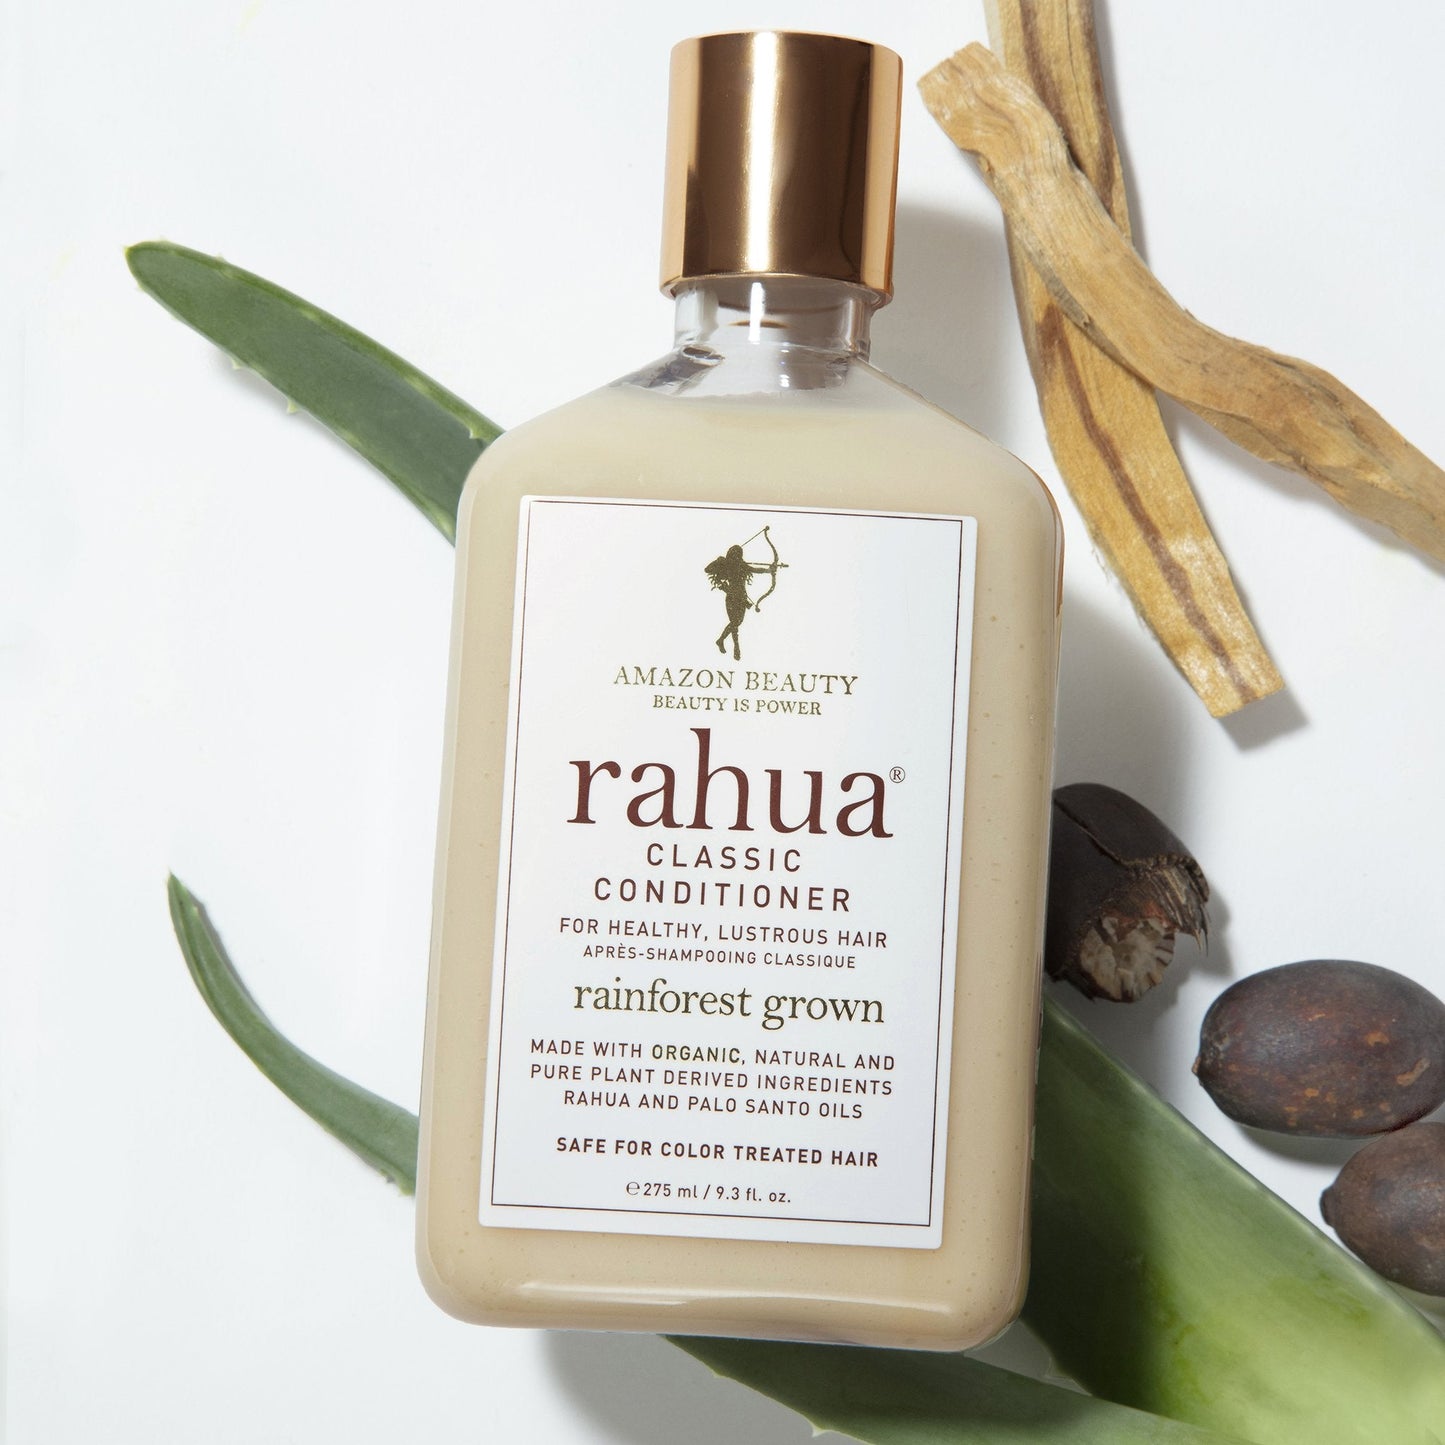 Rahua Classic Conditioner with Ingredients Like Rahua Seeds, Palo Santo Sticks, and Aloe Vera